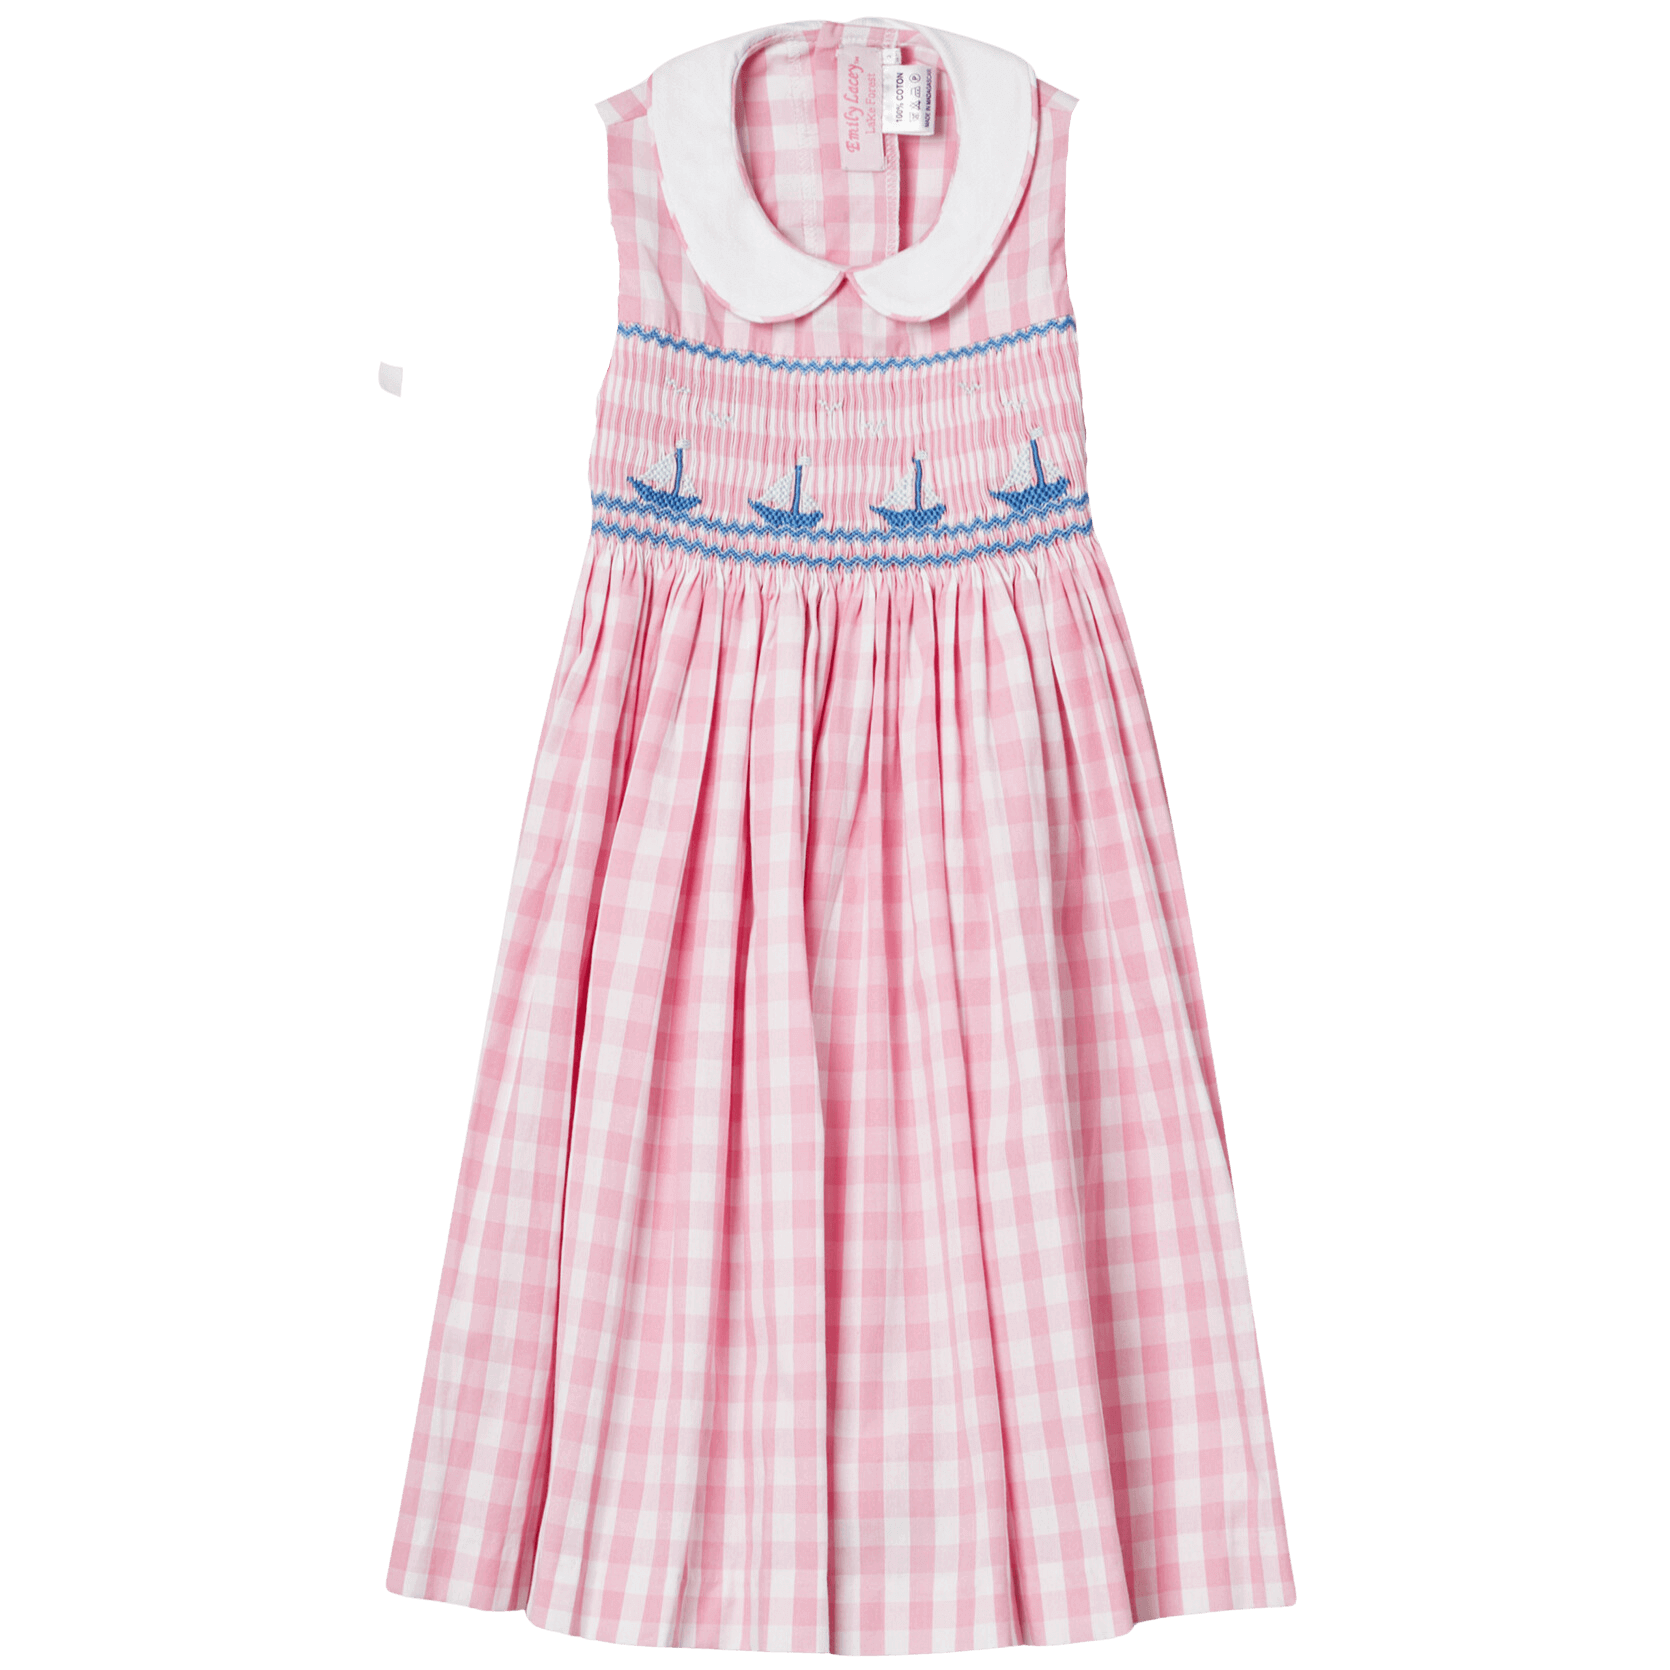 Smocked Pink Sailboat Dress